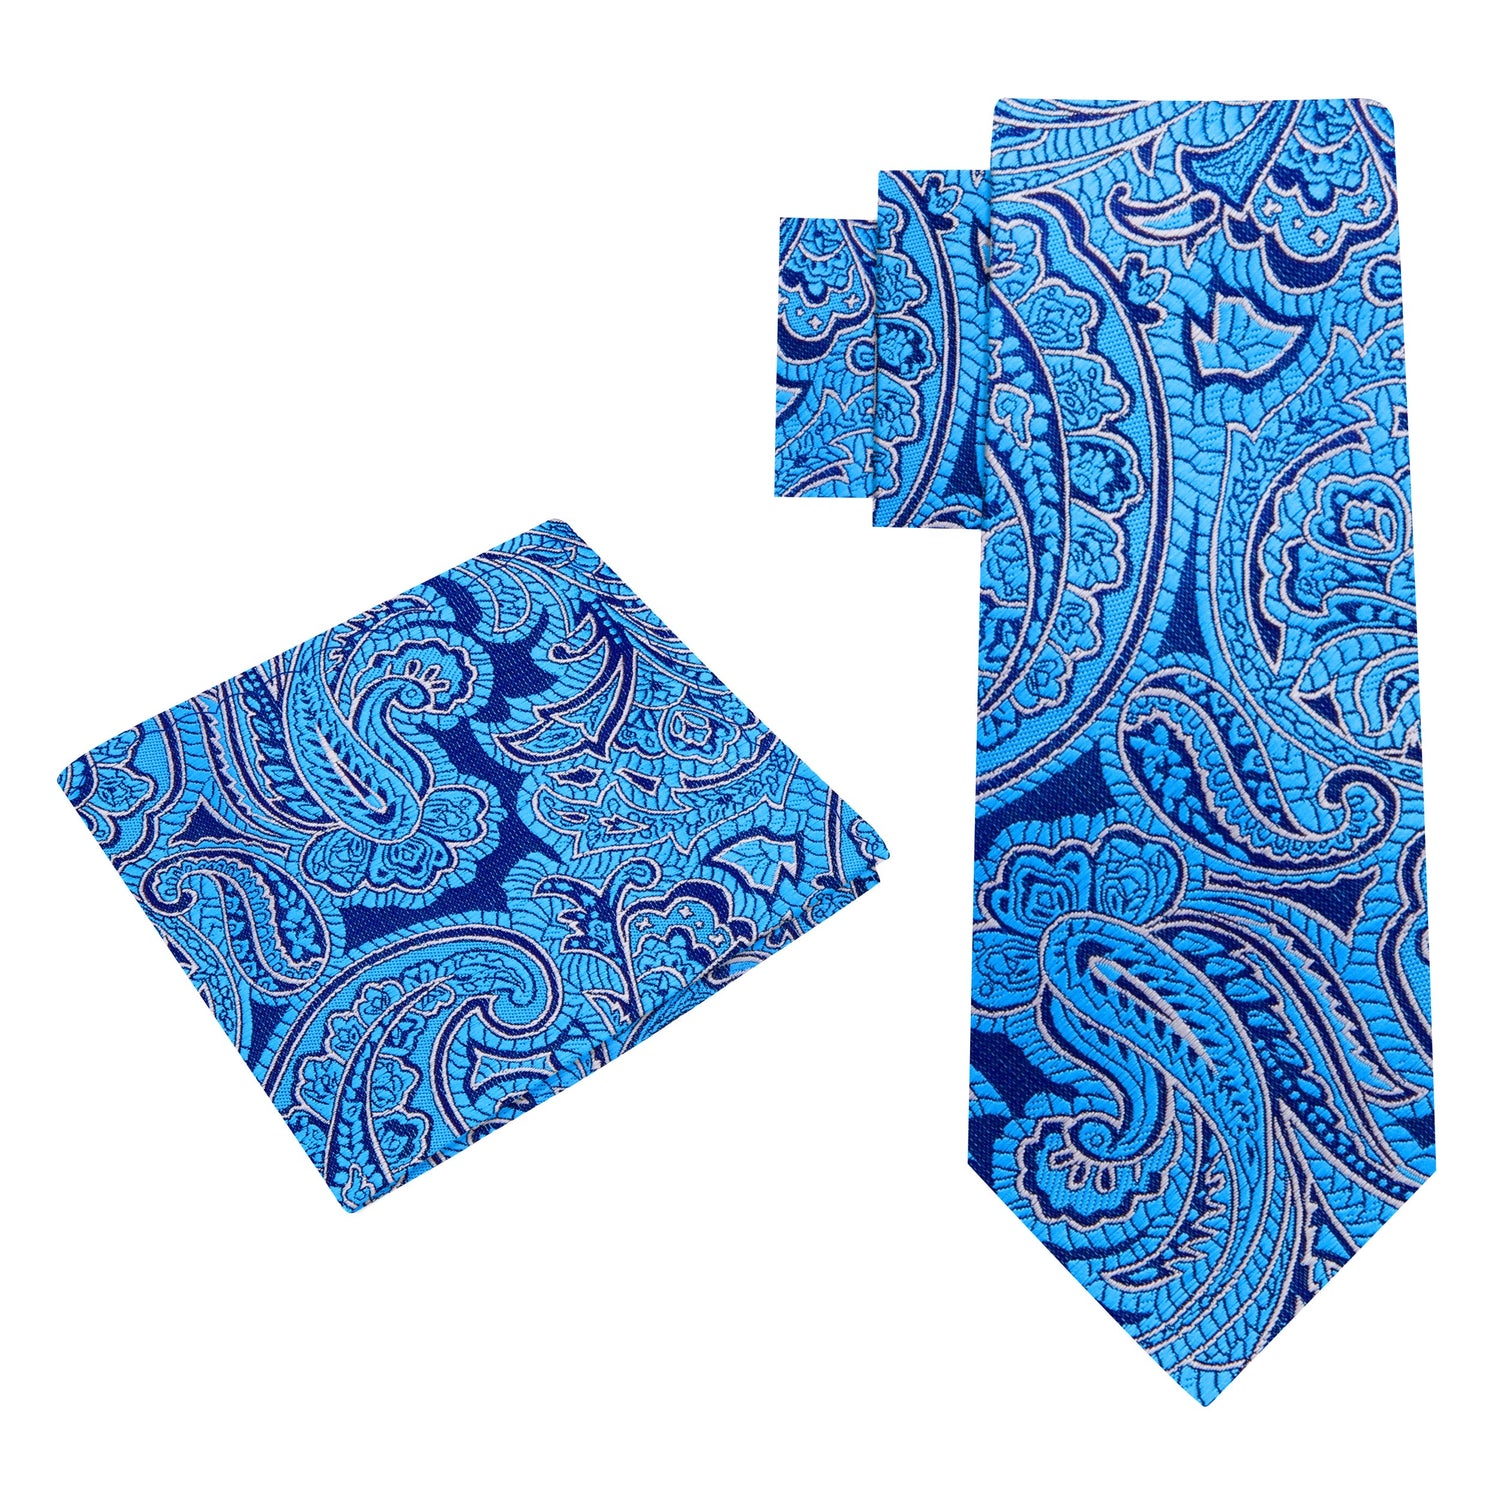 Alt View: A Teal, Dark Blue Paisley Pattern Silk Necktie, Matching Pocket Square